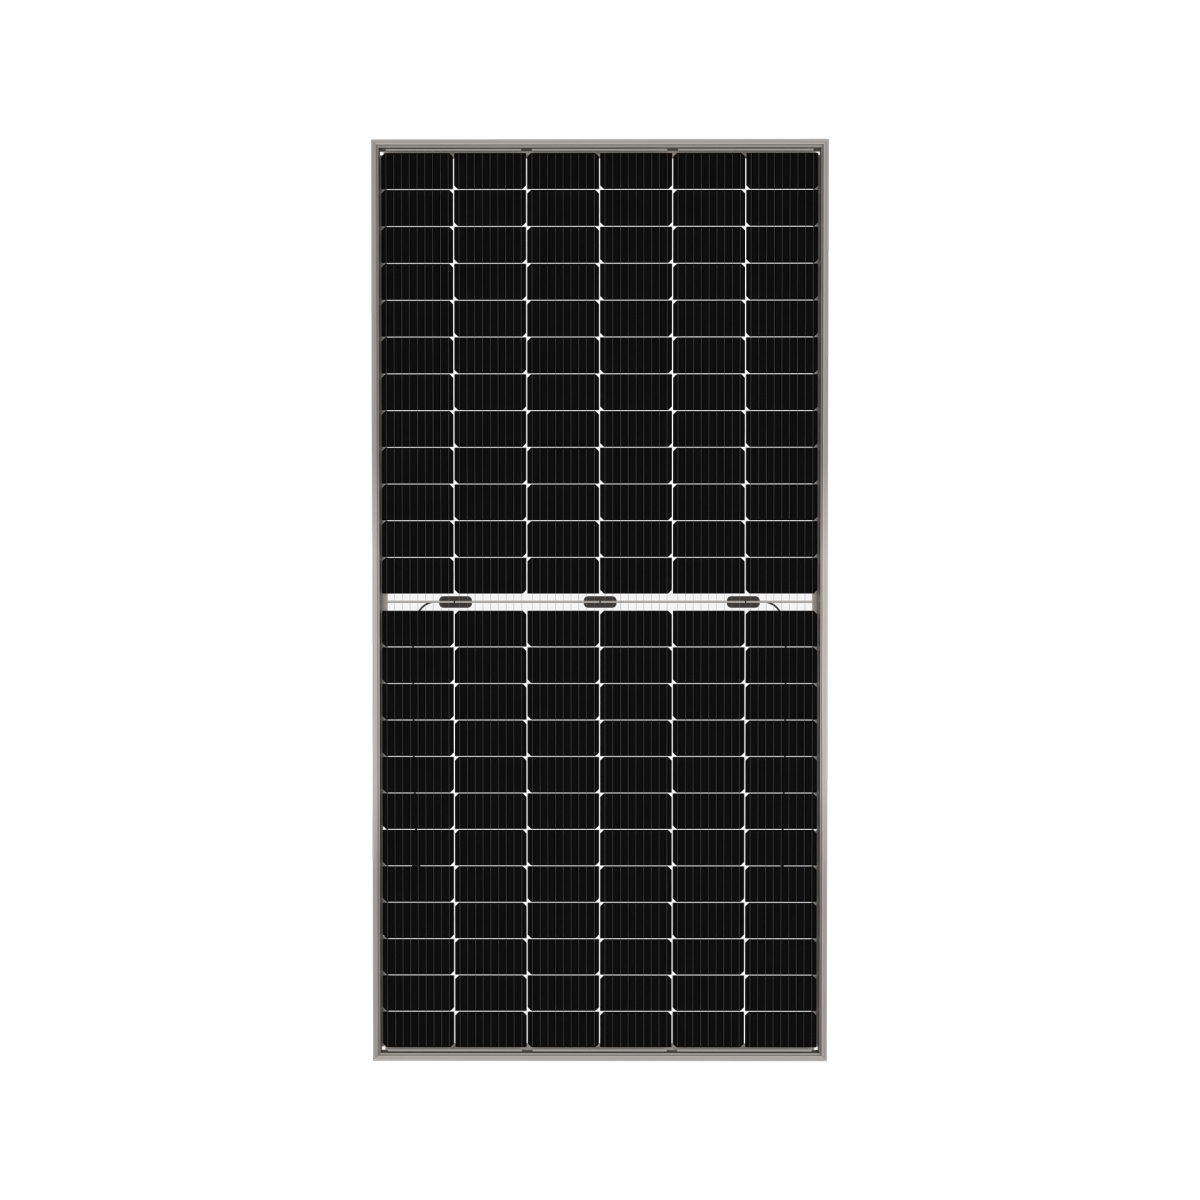 TommaTech 445 Watt 144 Percmono Bifacial Half-Cut Multi Busbar Solar Panel